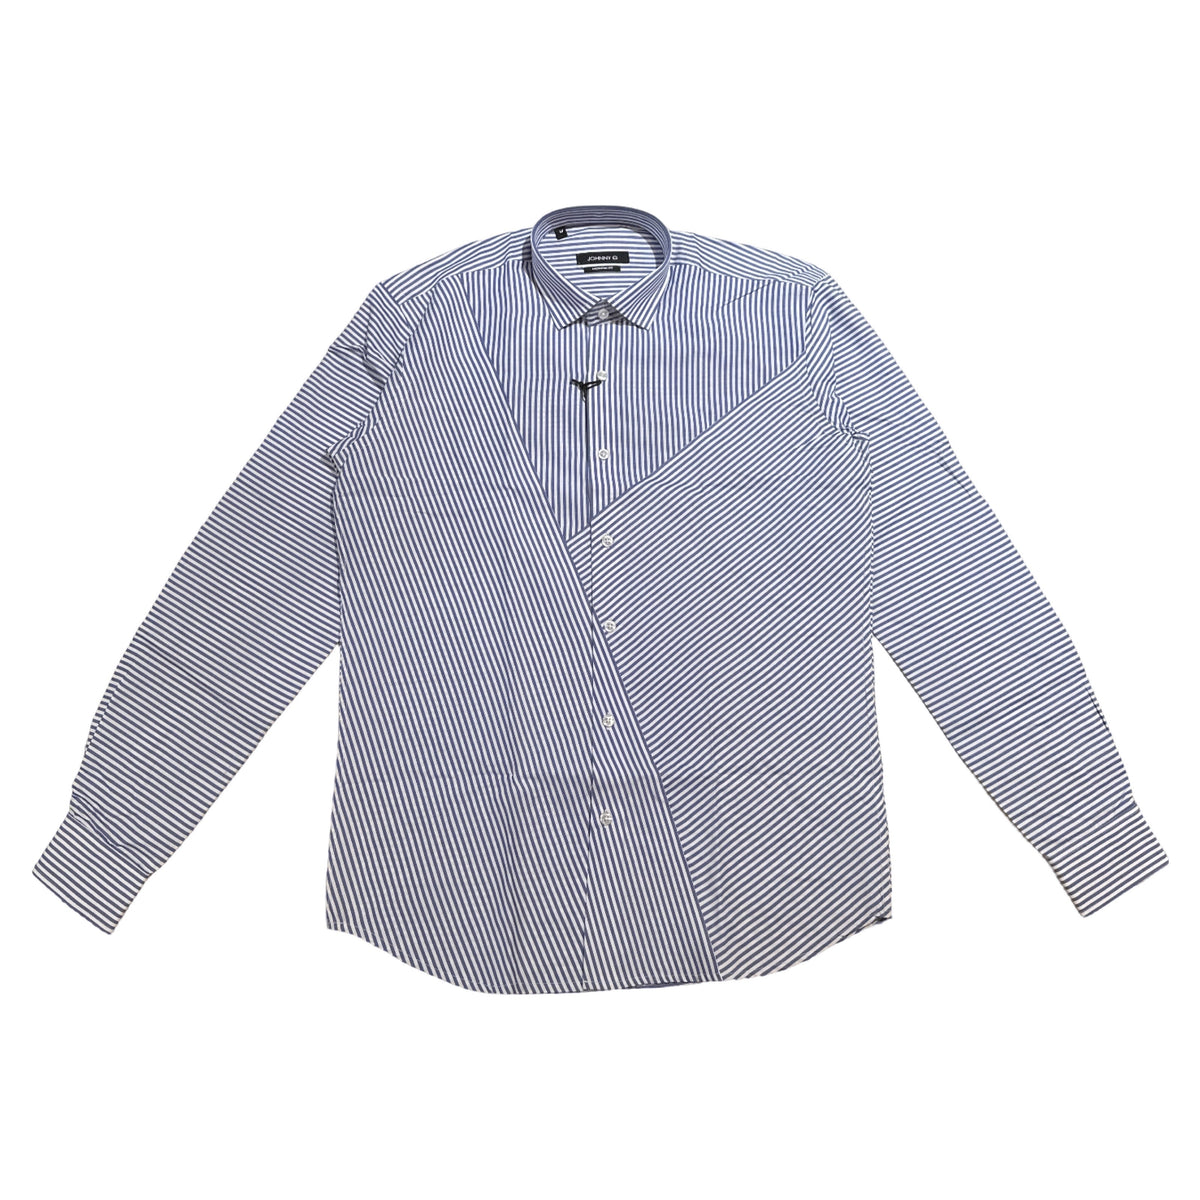 Johnny Q JQ 1008-D White/Blue Button Up Shirt